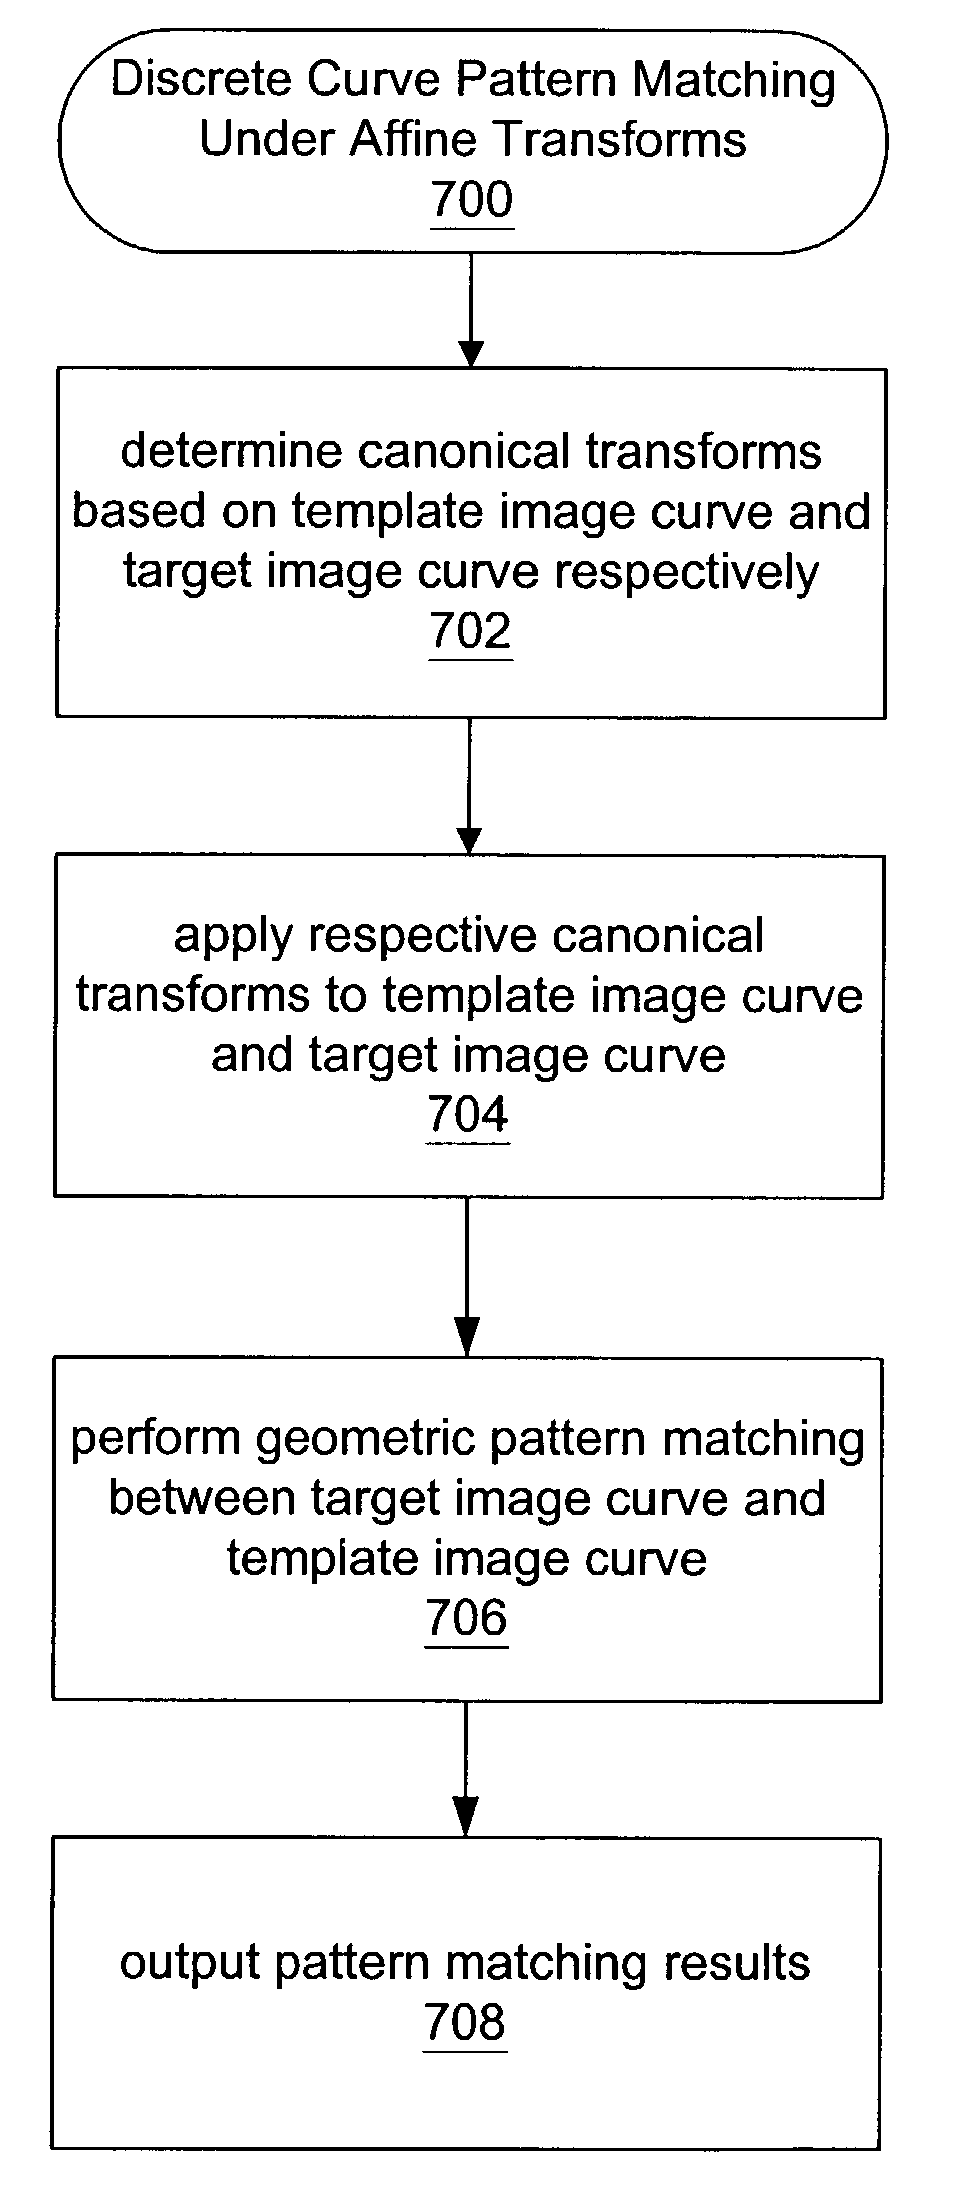 Matching of discrete curves under affine transforms